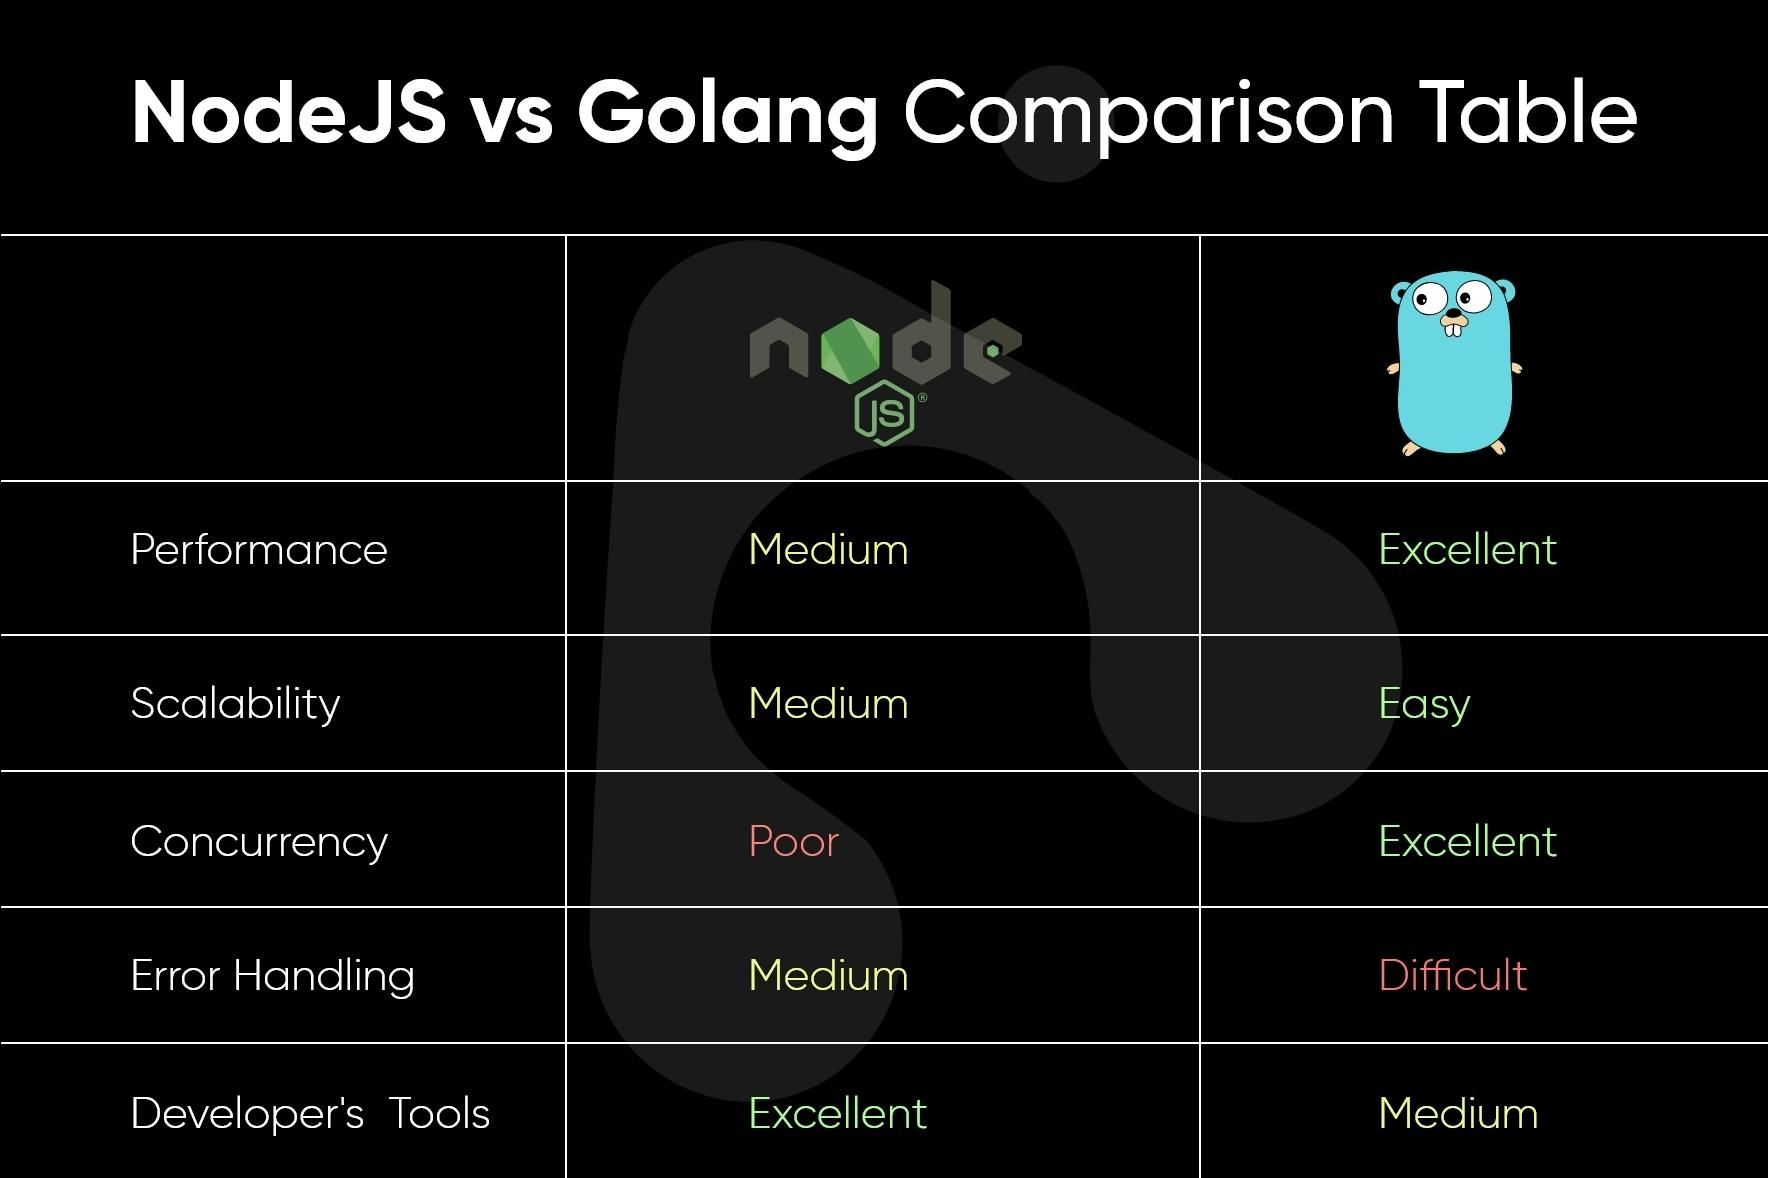 nodejS-vs-golang-comparison-table-1.jpg